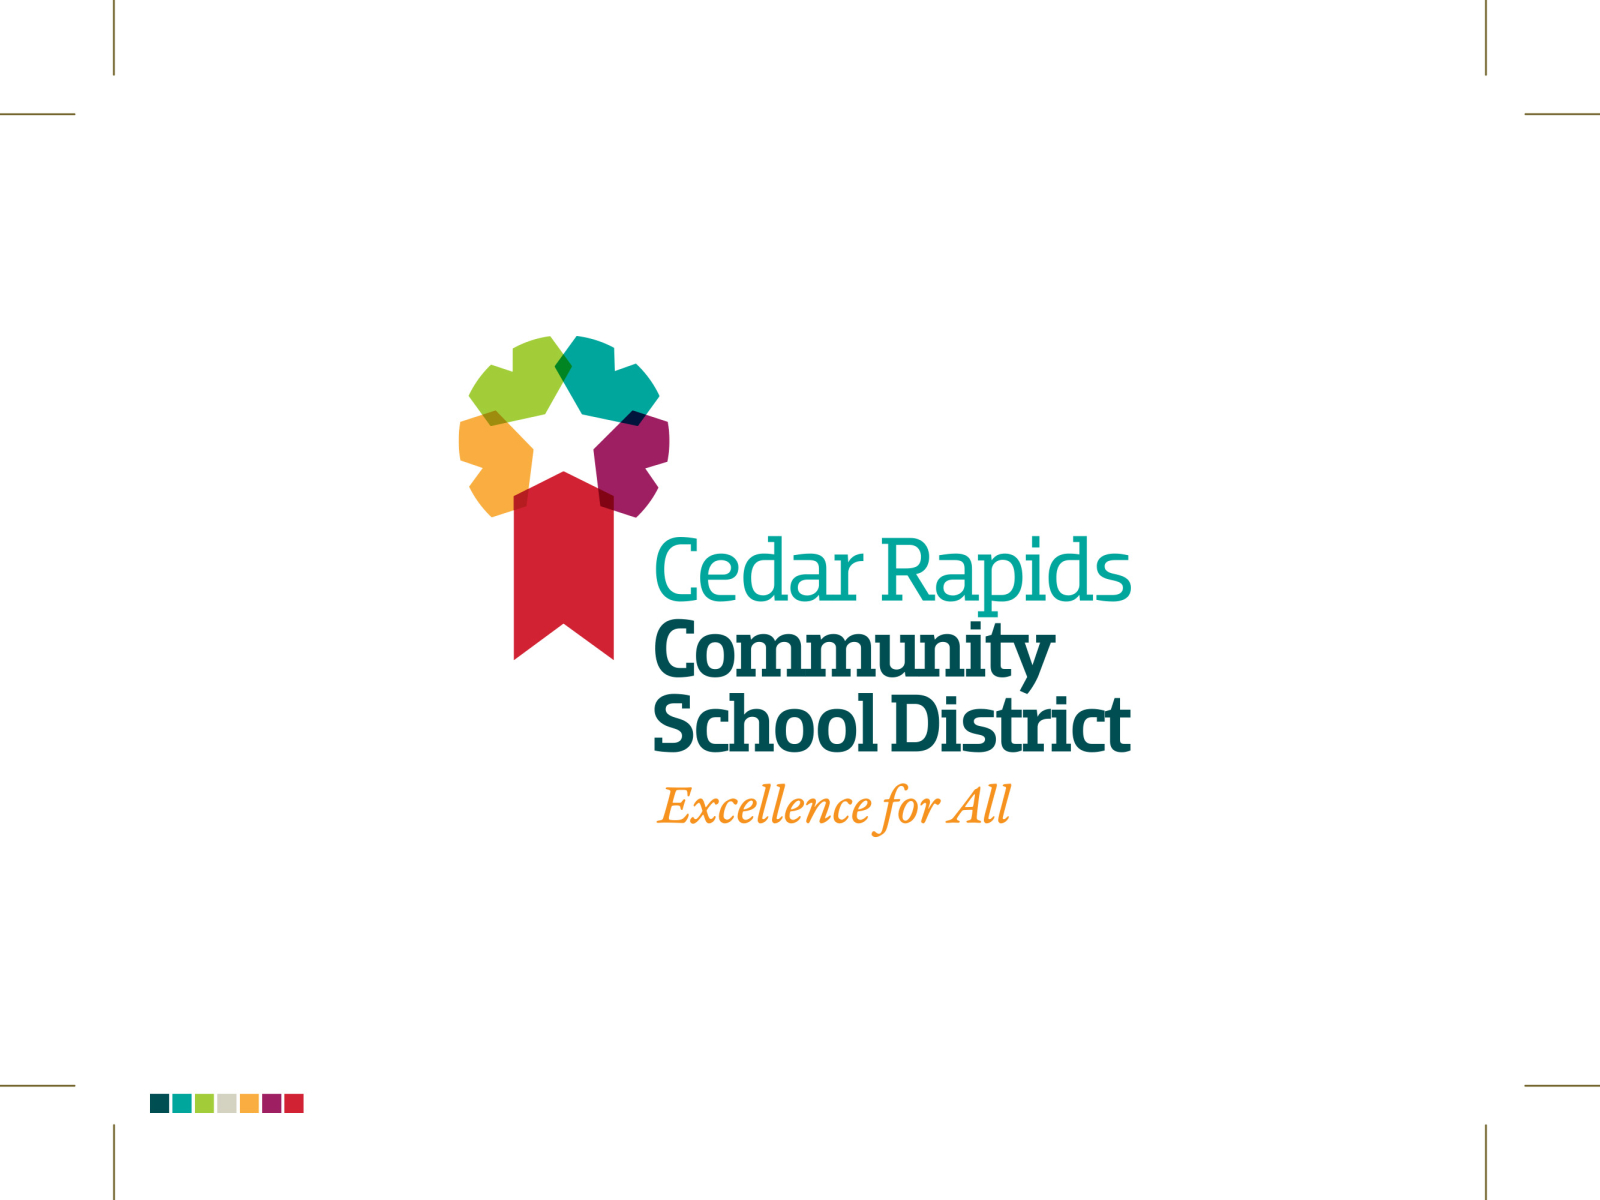 Cedar Rapids School District Logo by Chris Moore on Dribbble